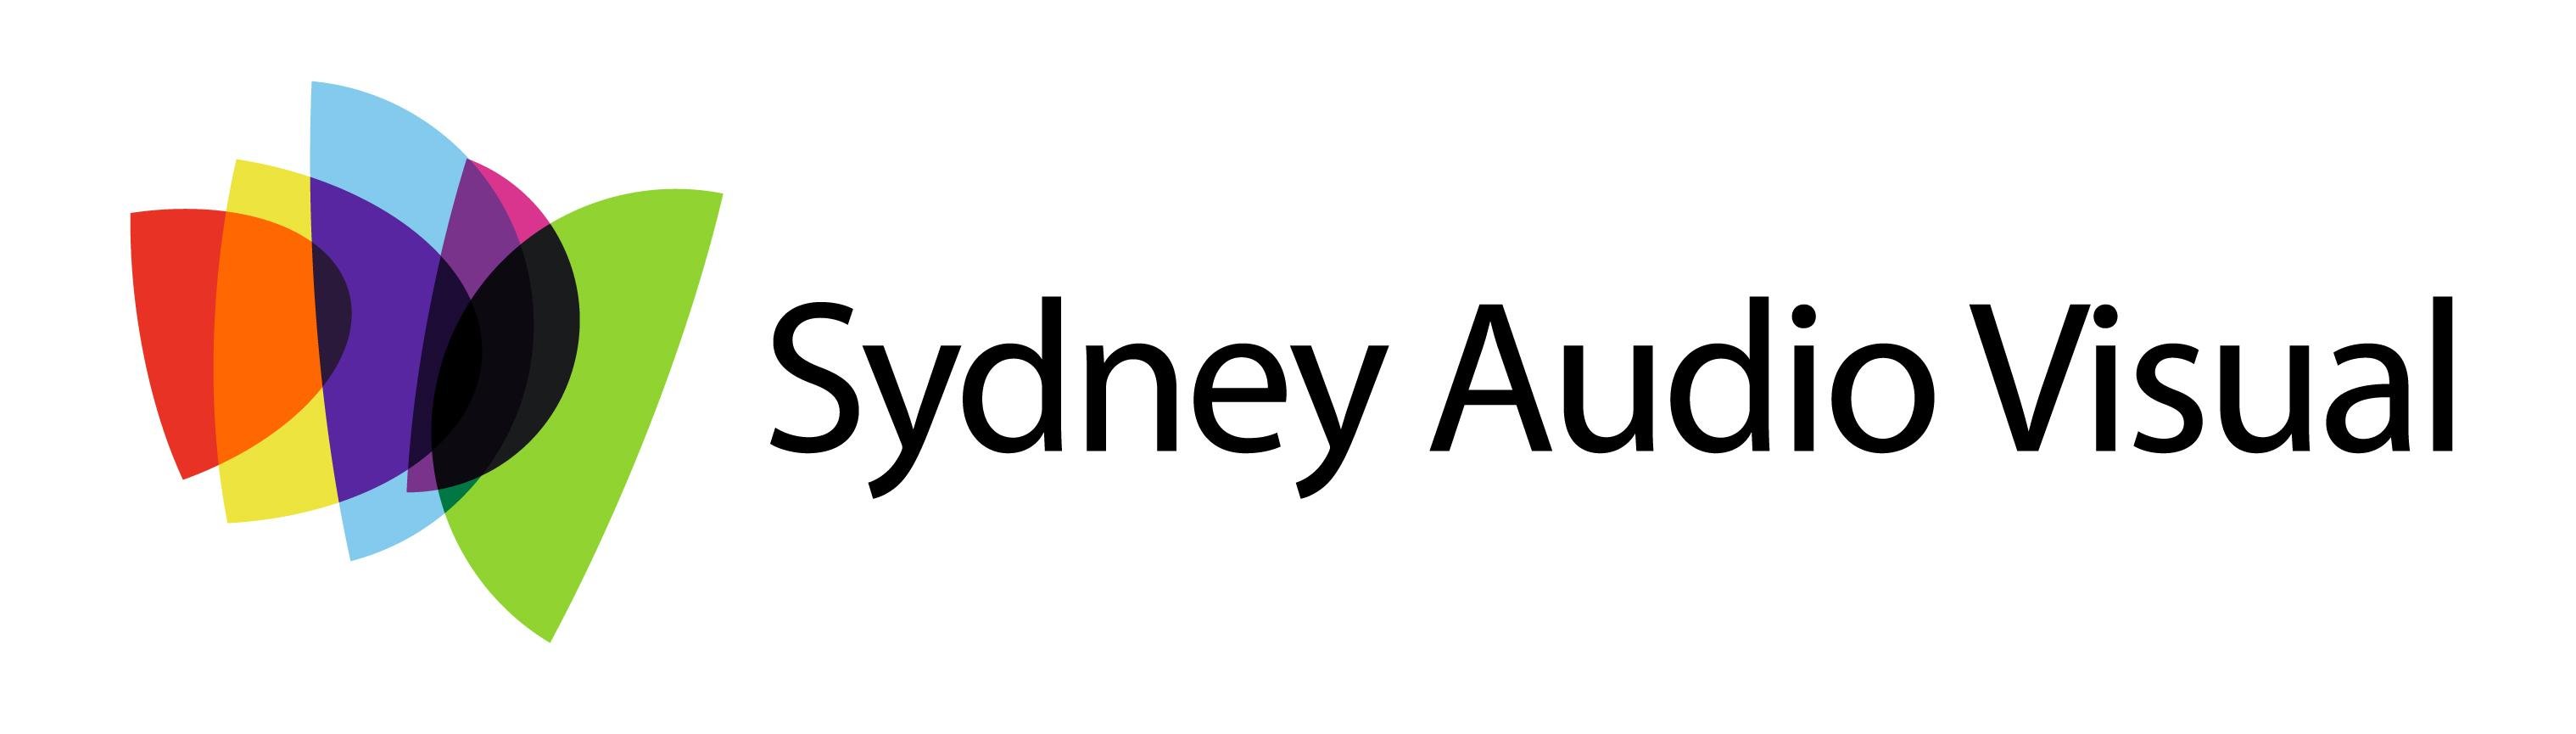 Sydney Audio Visual